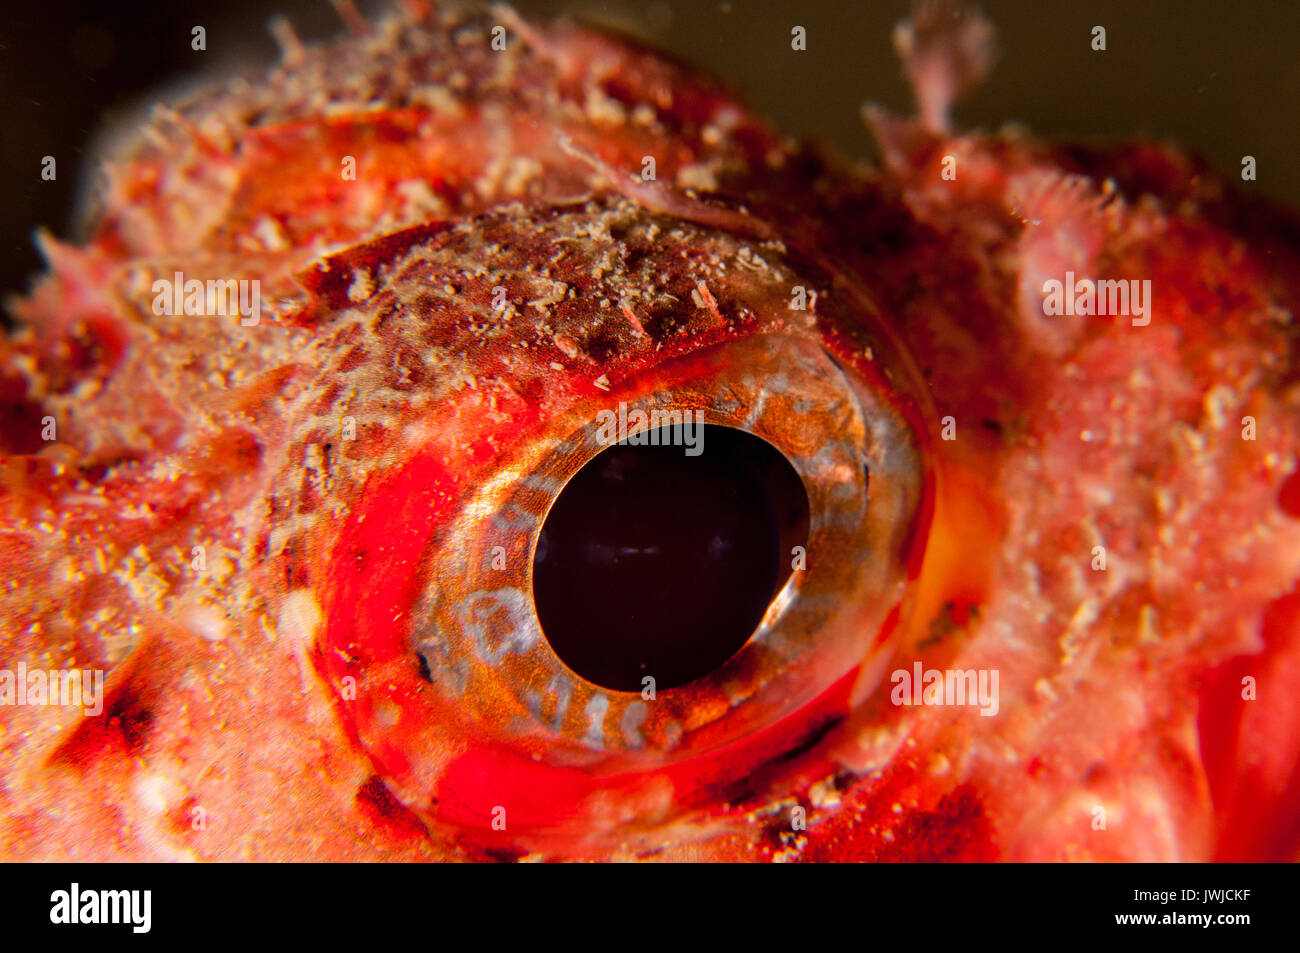 close-up view of the eye of a Small red scorpionfish (Scorpaena notata), L'escala, Costa Brava, Catalonia, Spain Stock Photo